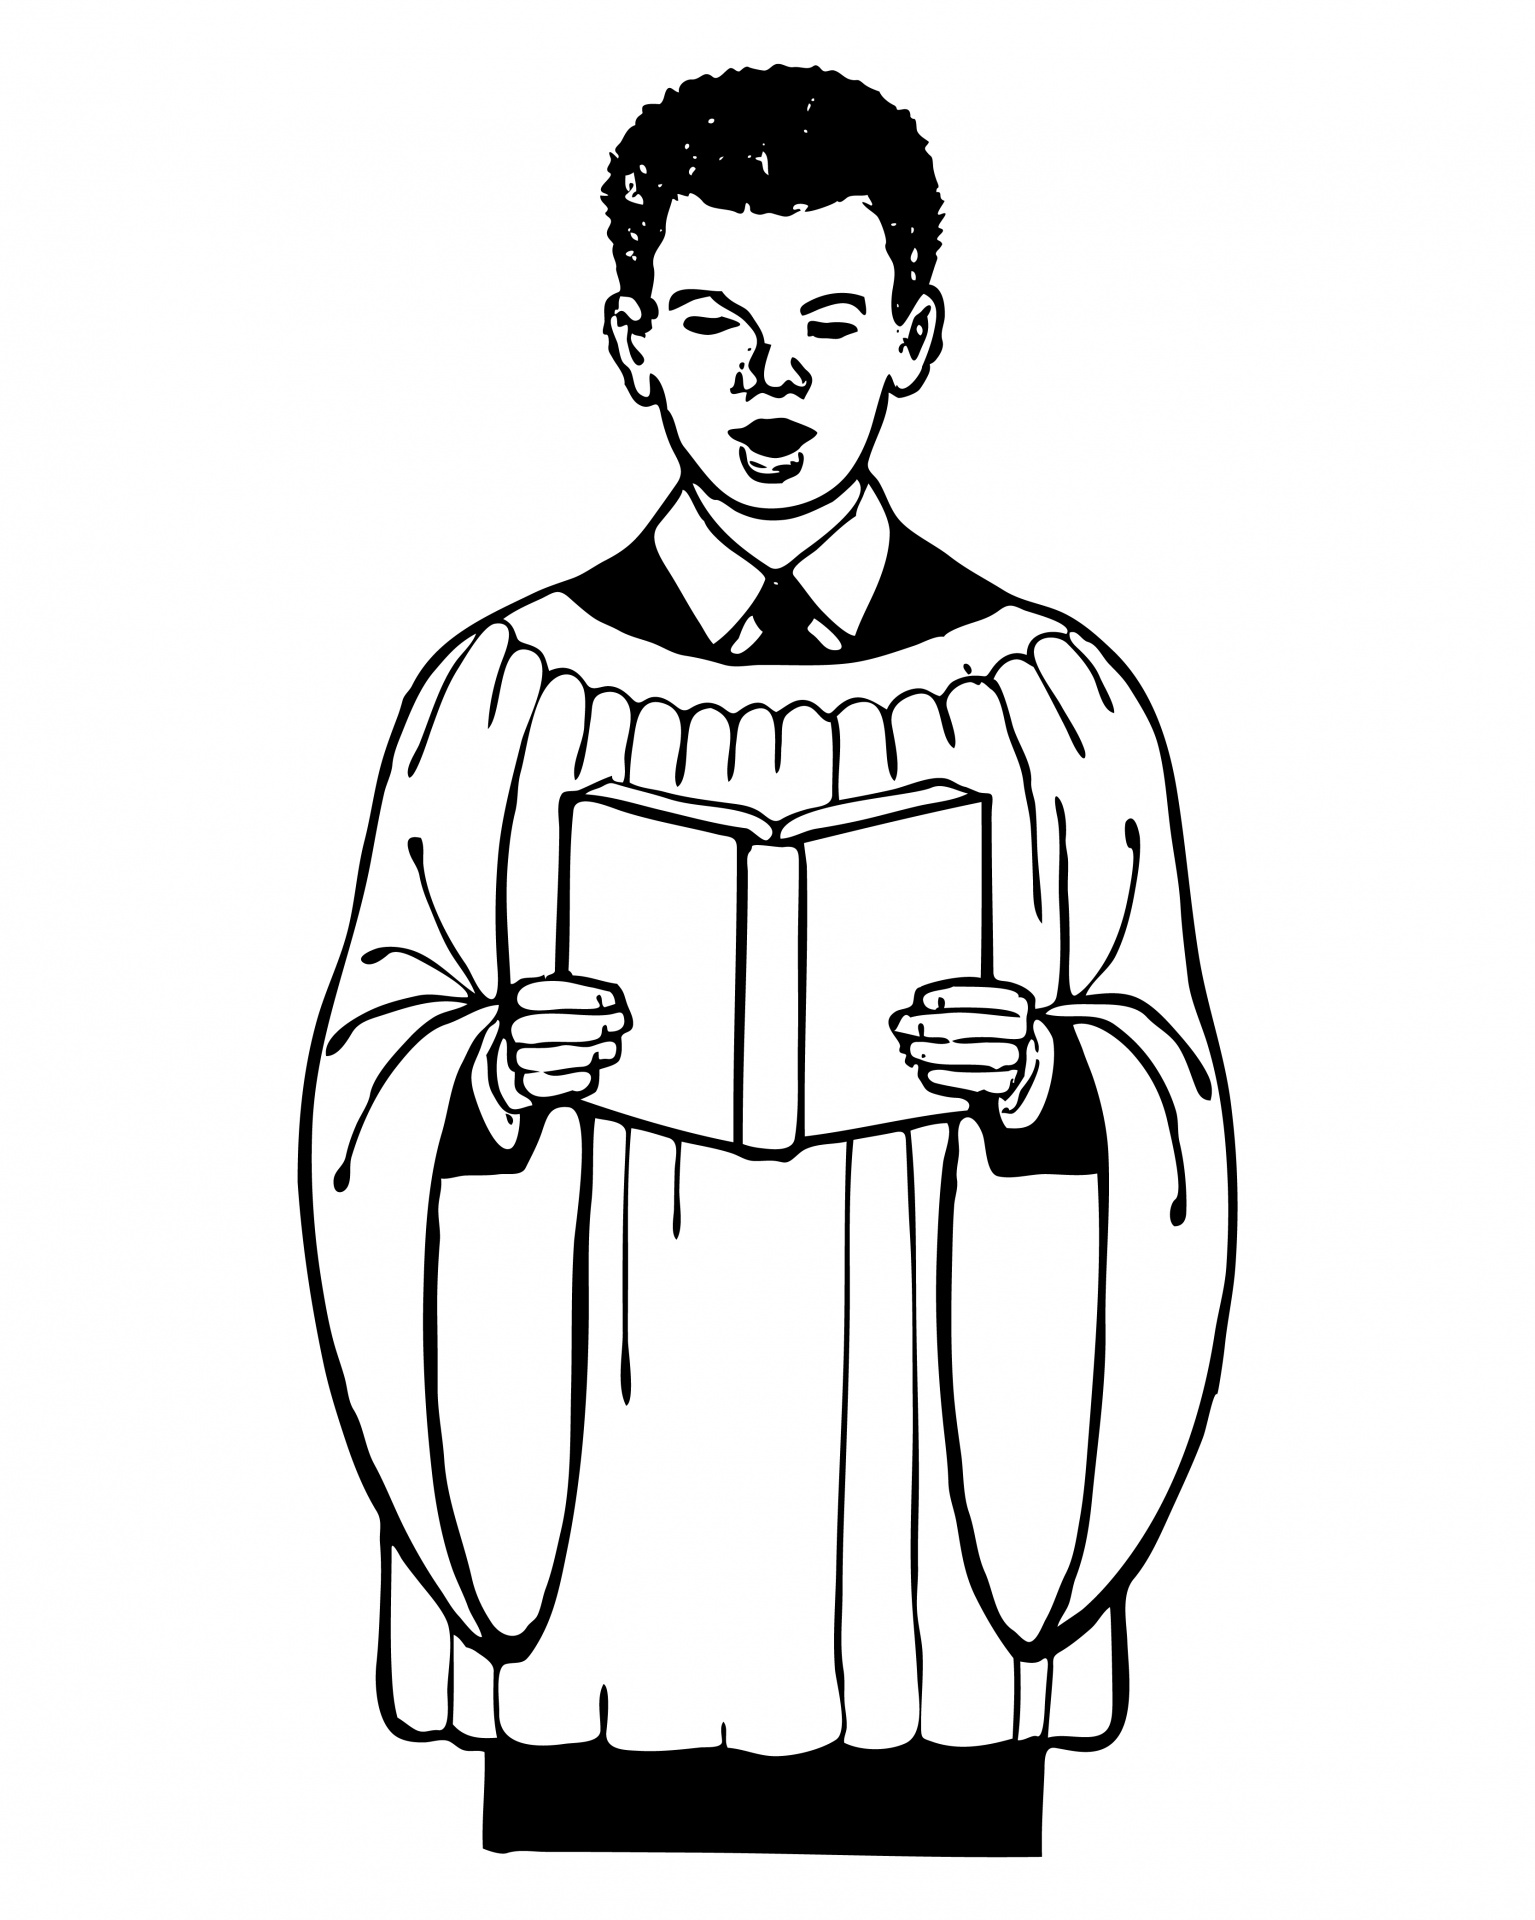 Line art illustration of a a male choir singer in surplice